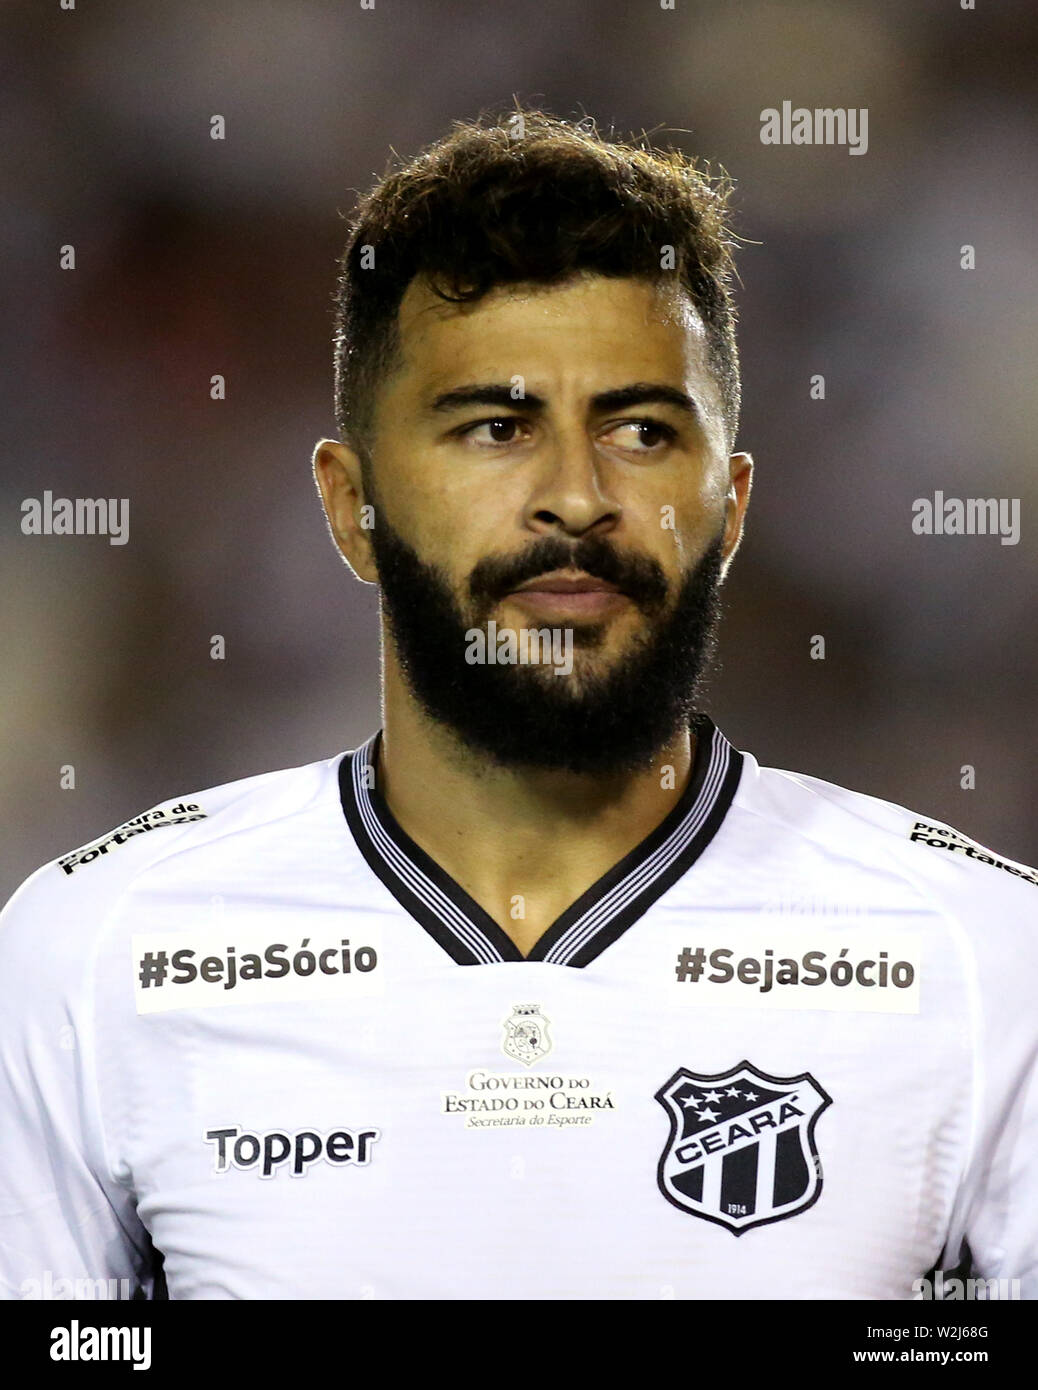 Lucas Cardoso - Player profile